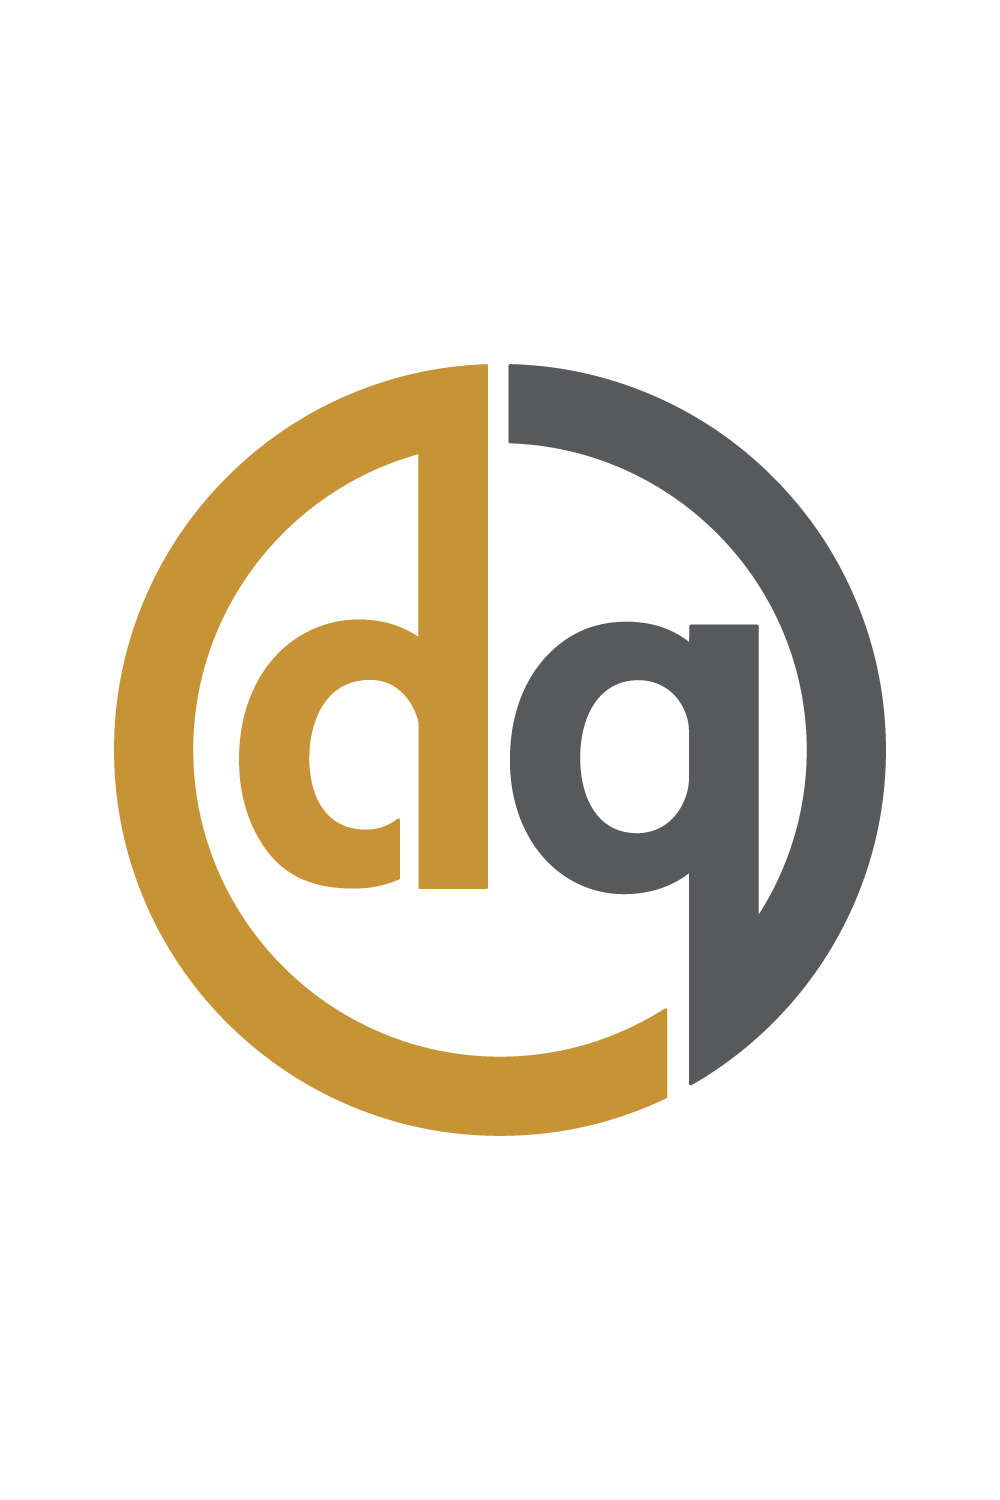 Initials DQ letters logo design vector images QD logo template vector best identity DQ circle logo Premium vector illustration pinterest preview image.